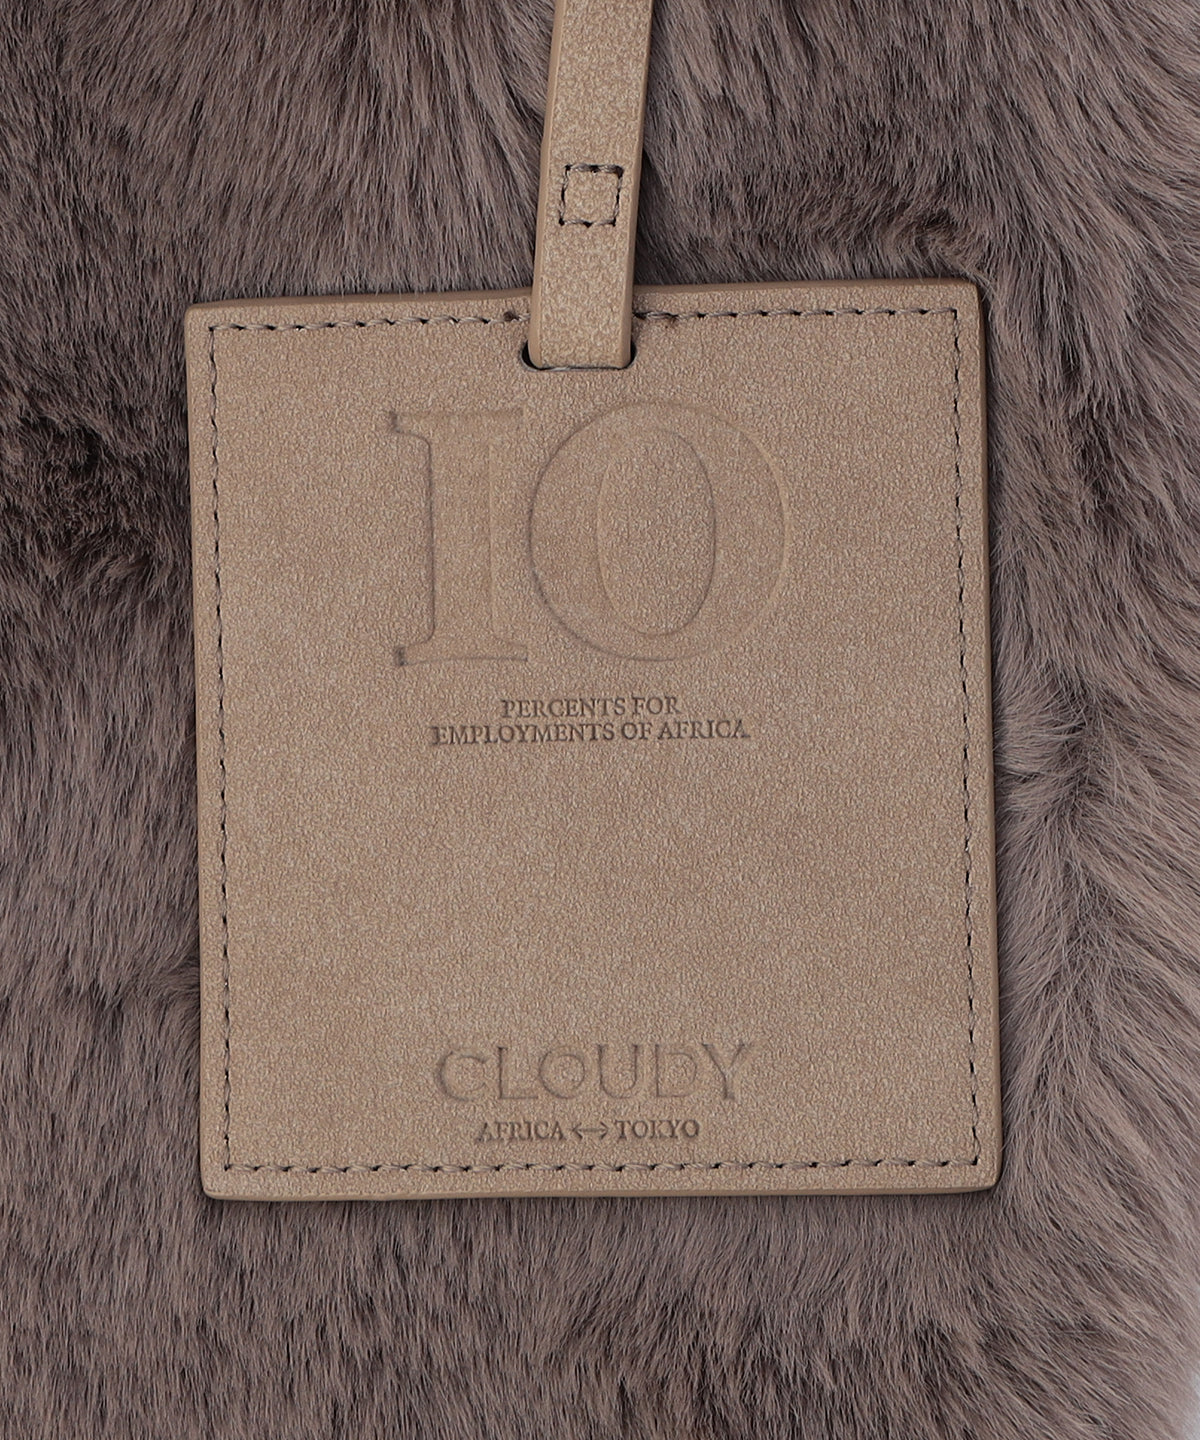 Eco Fur Convenience Bag (Small) GREIGE